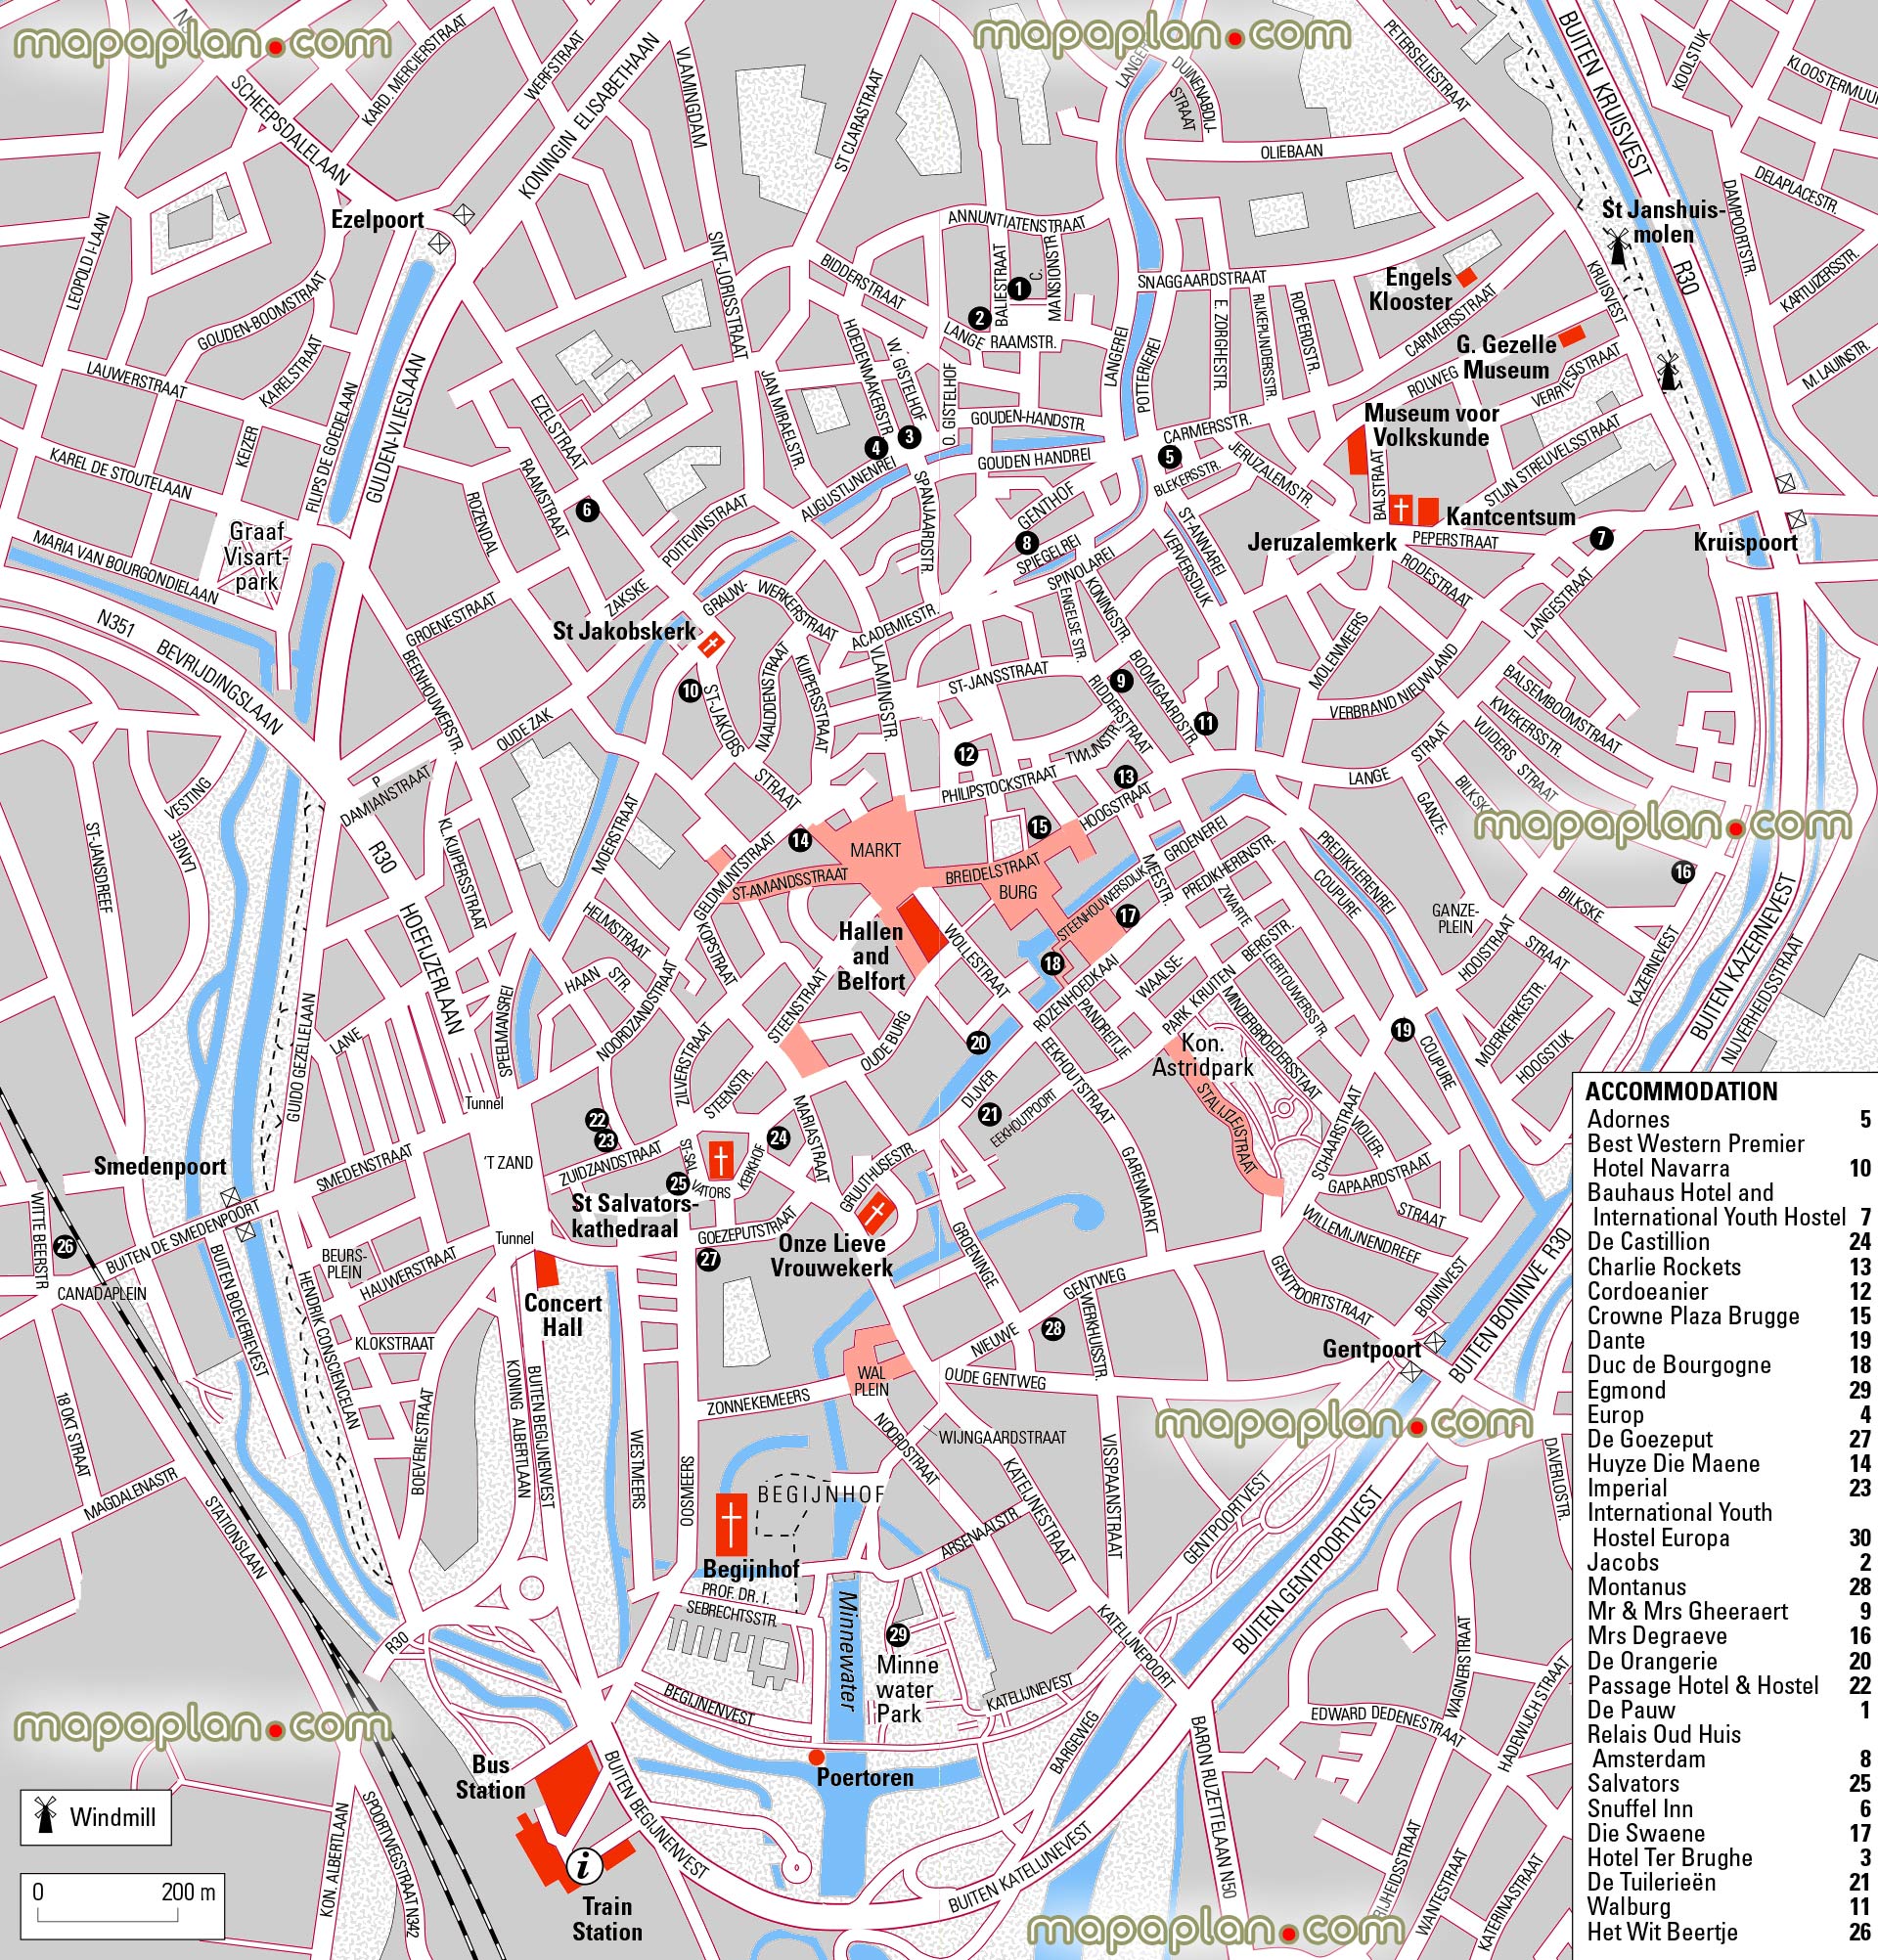 Bruges map - Central Bruges (Brugge) hotels and accommodation map with